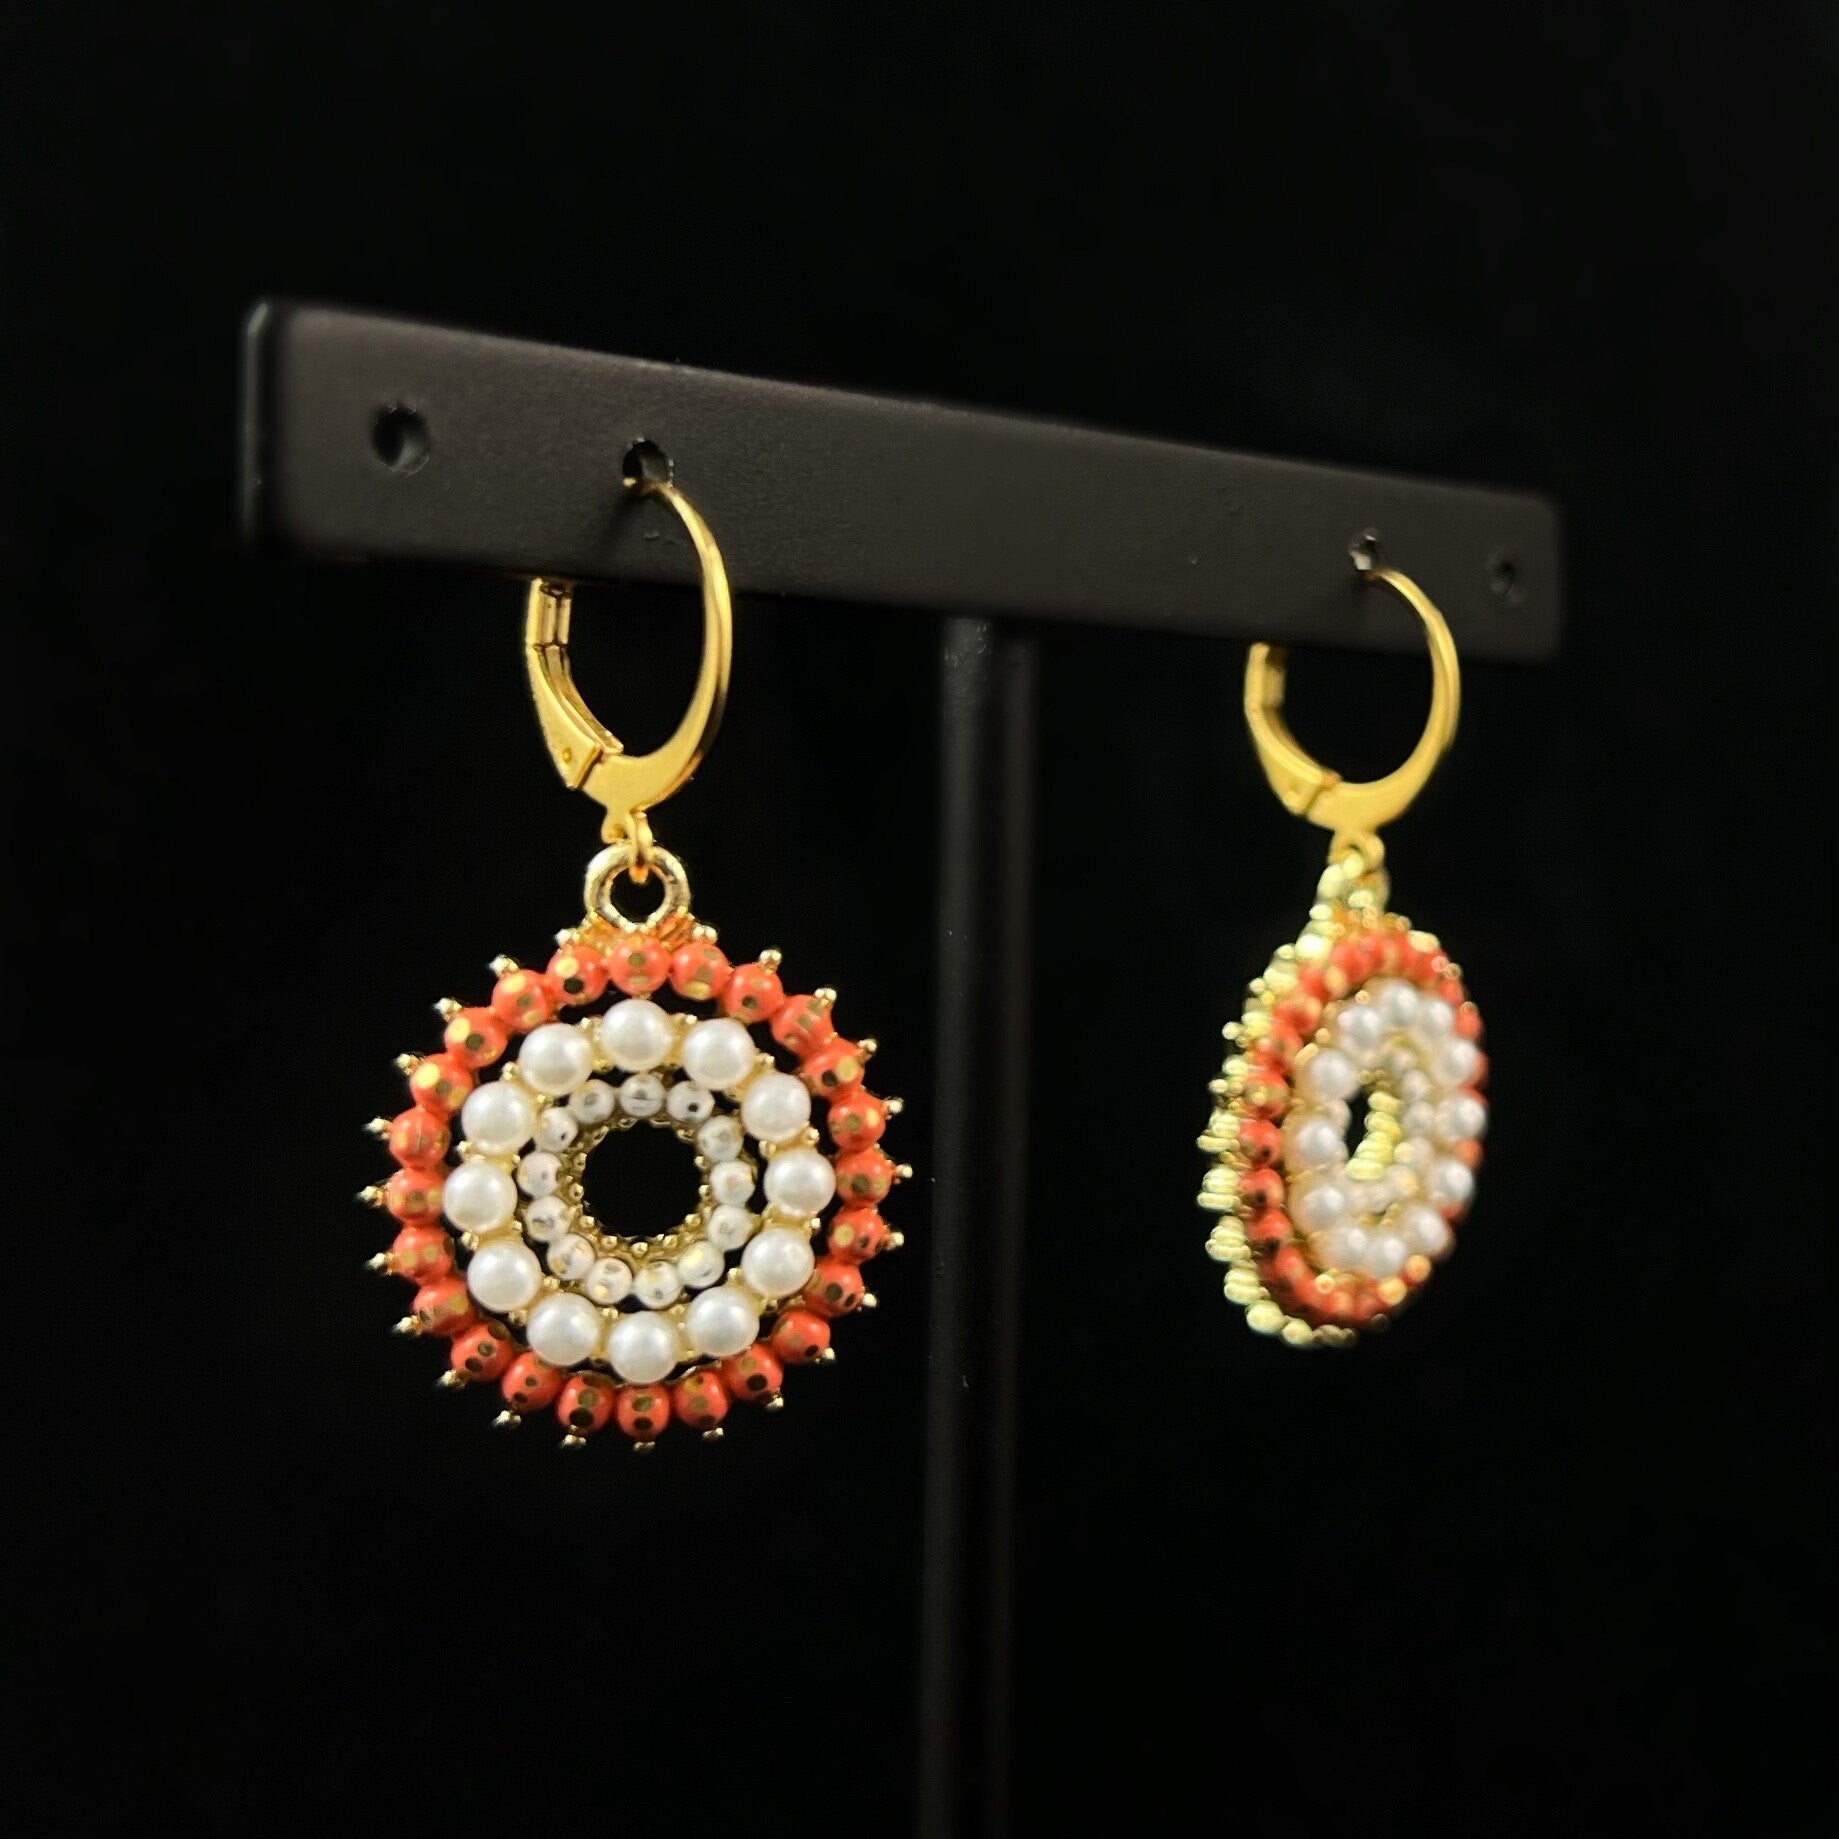 Orange Swarovski Crystal Drop Earrings with Crystal and Pearl Detailing- La Vie Parisienne by Catherine Popesco